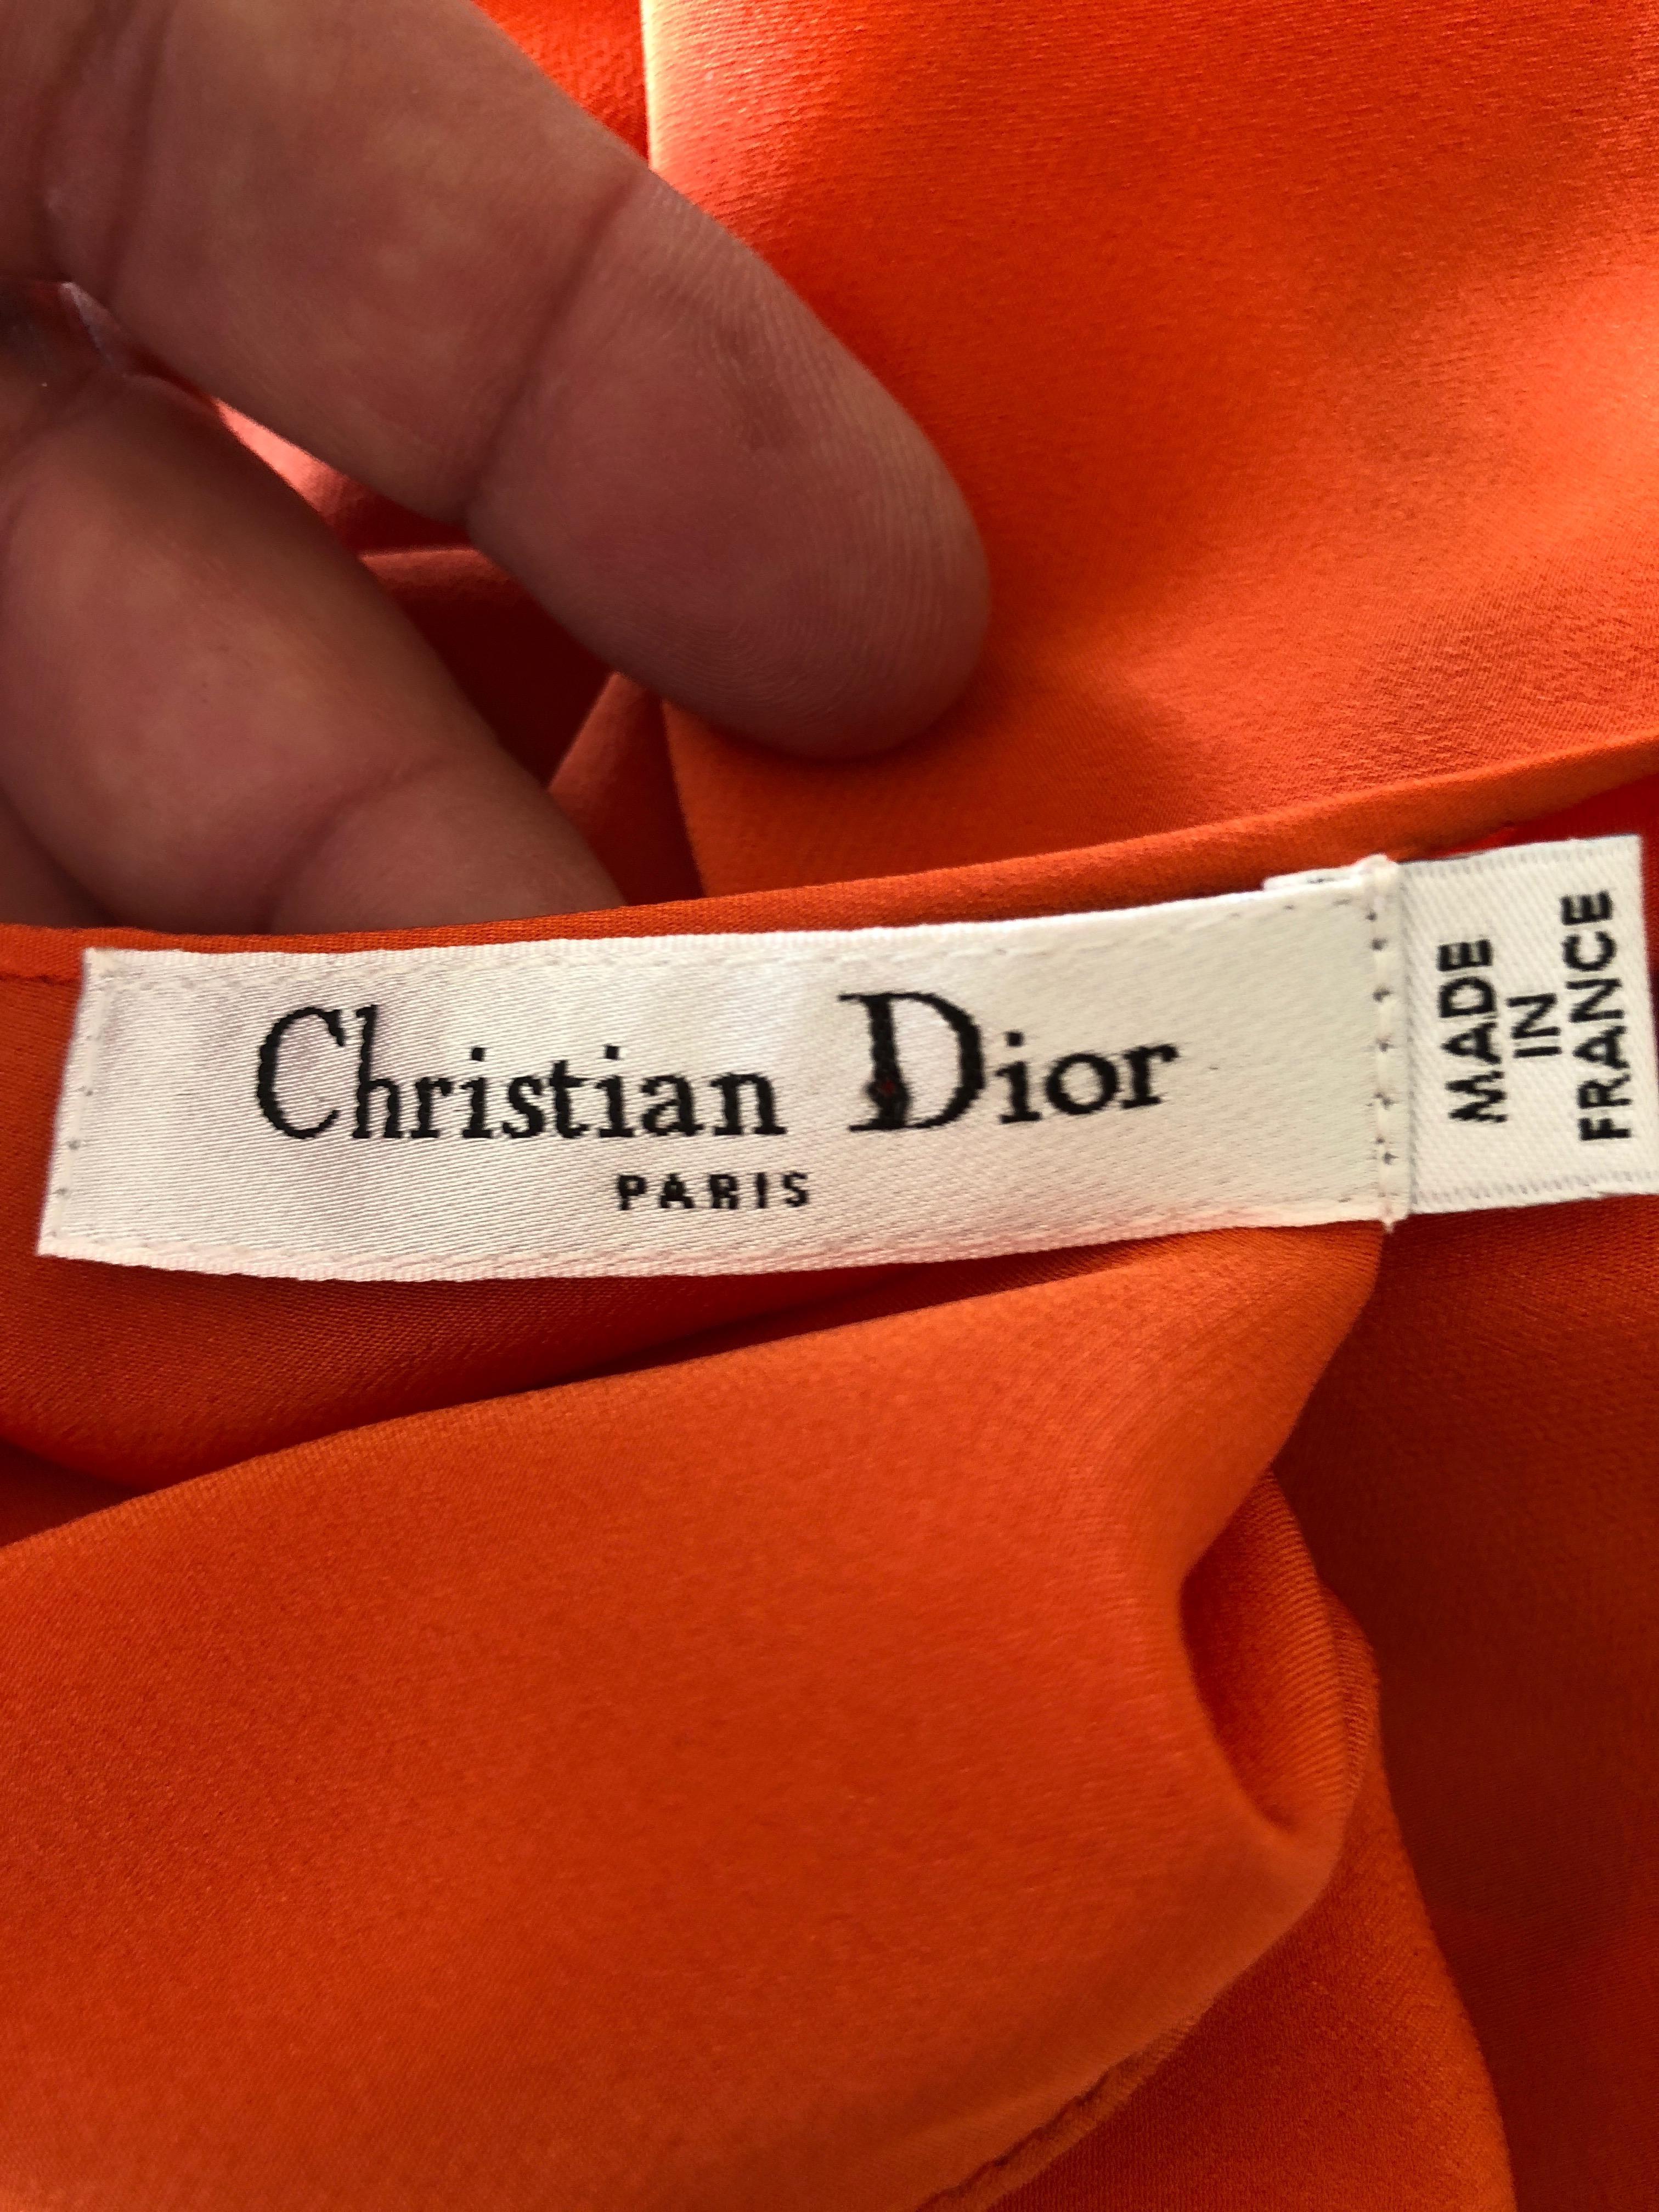 Christian Dior by John Galliano Low Cut Embellished Orange Silk Evening Dress For Sale 5